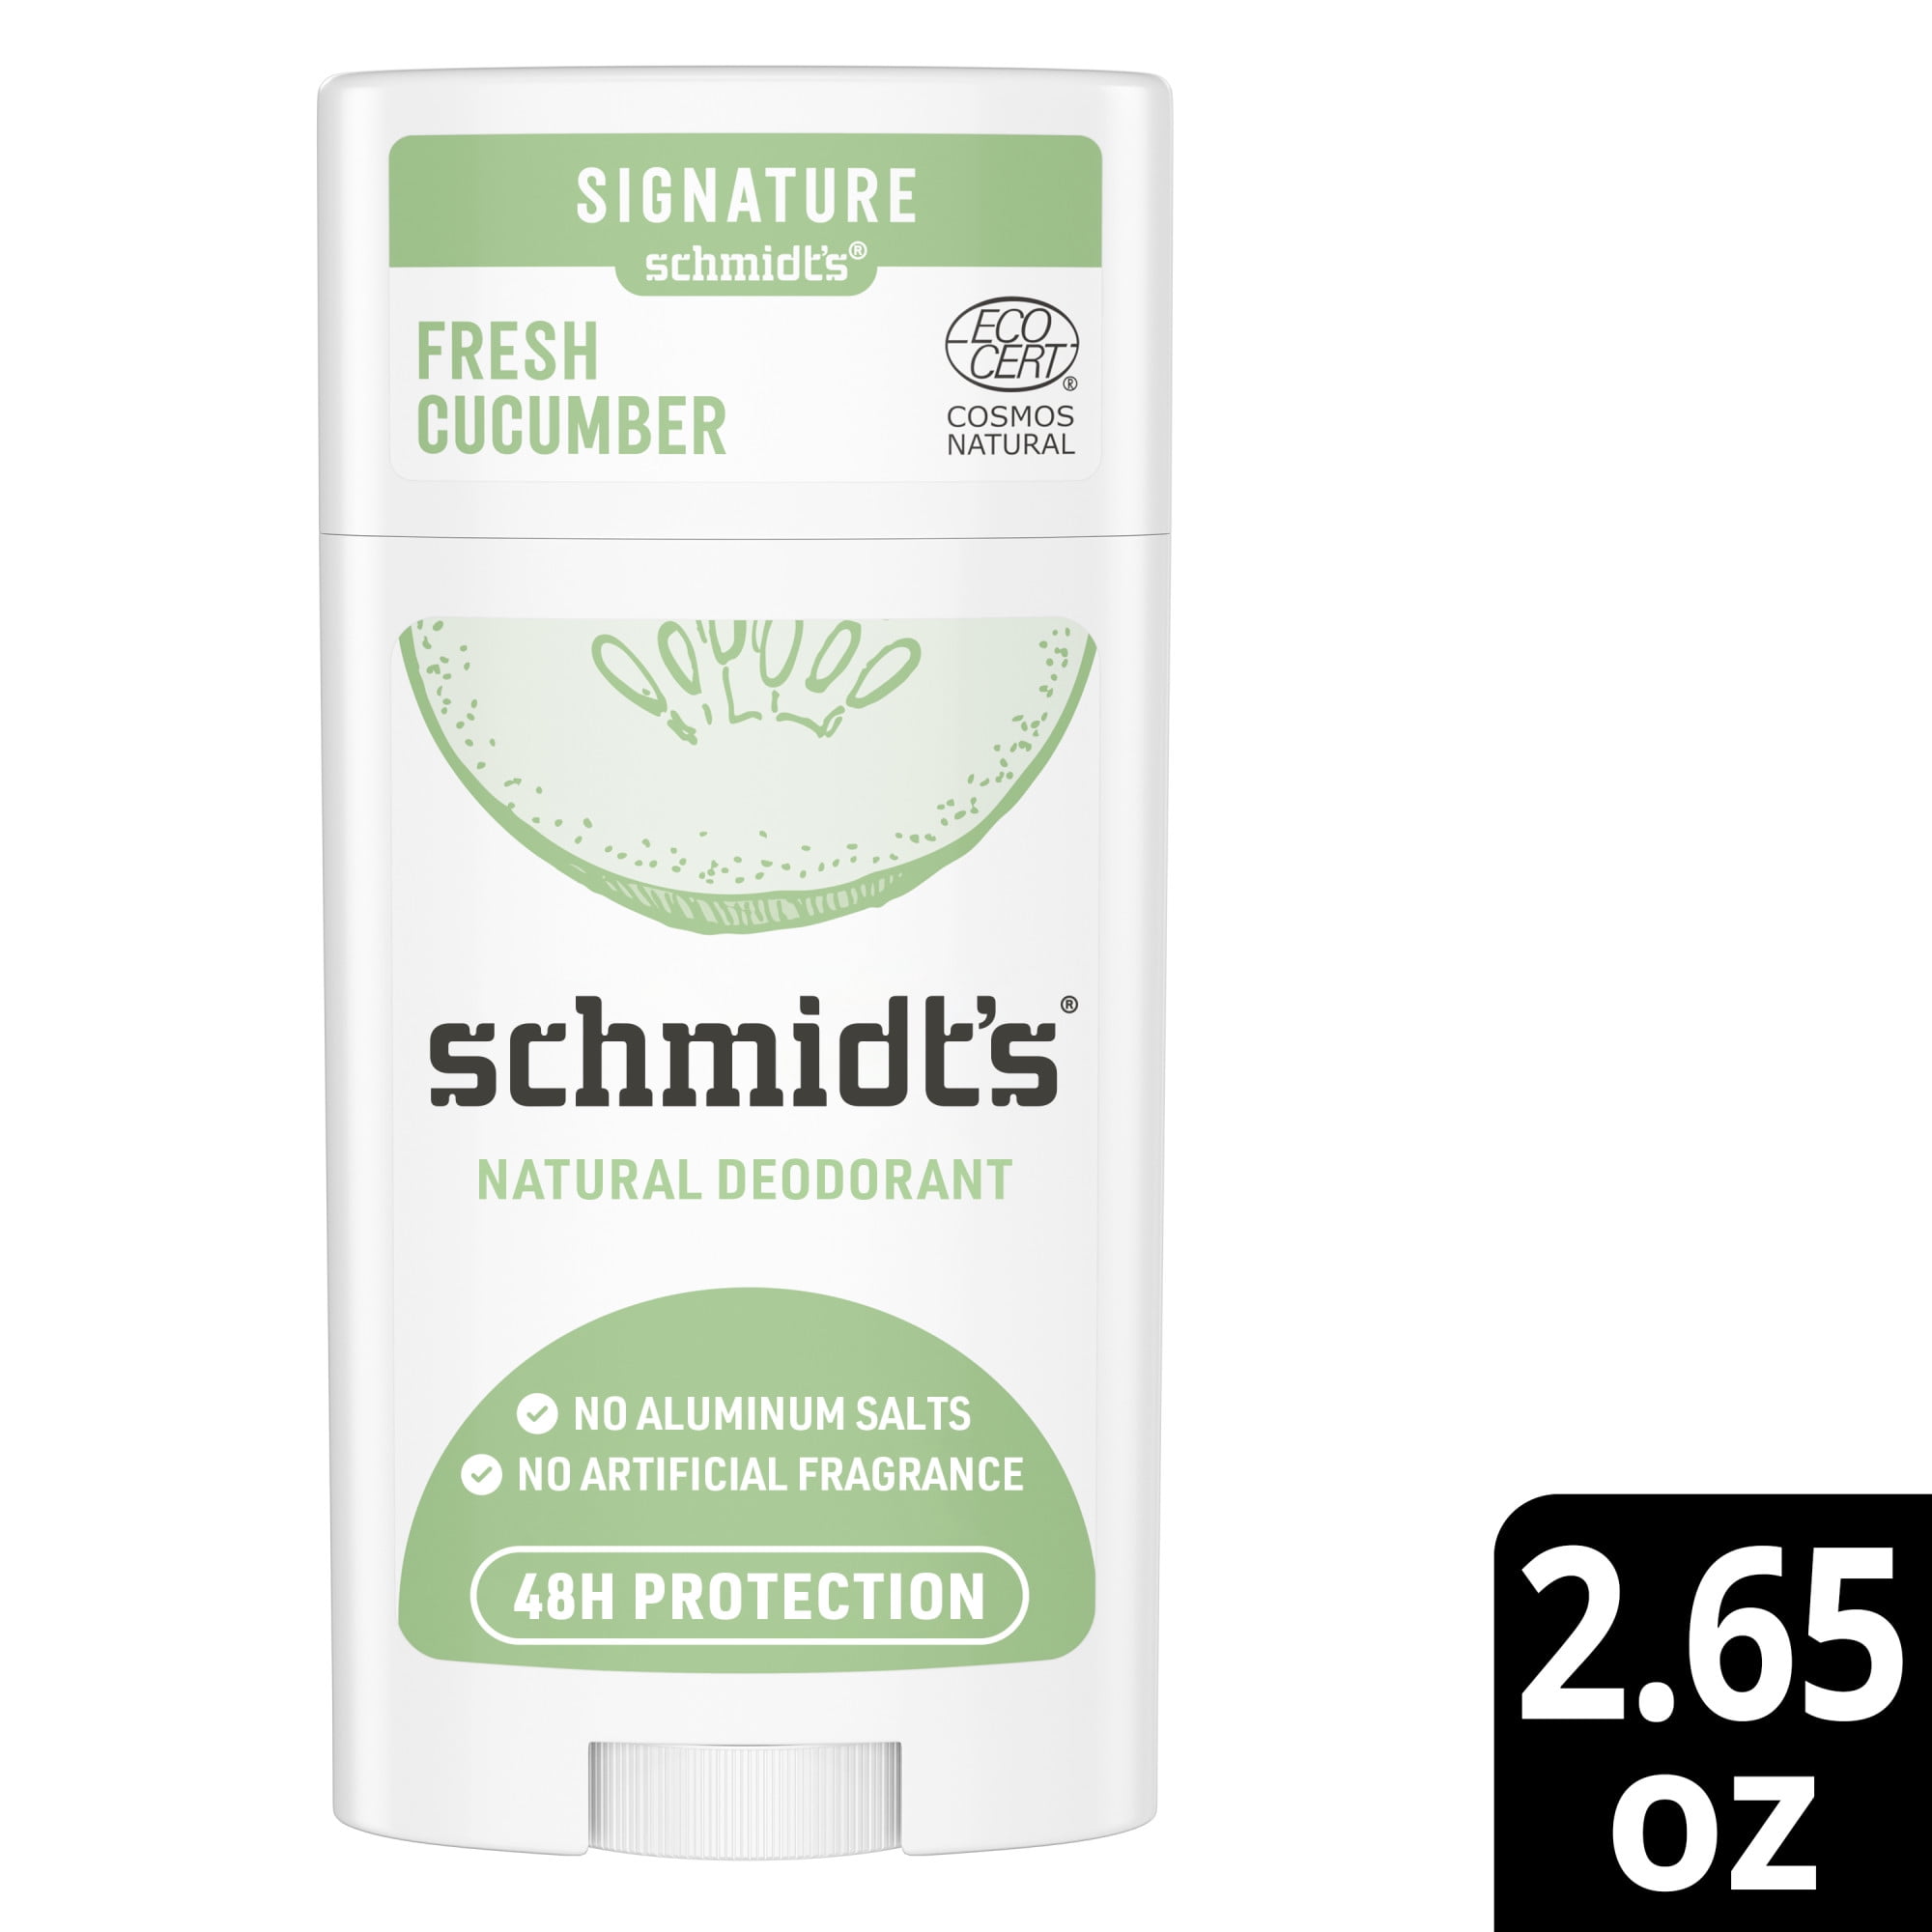 Schmidt's Aluminum Free Natural Deodorant Fresh Cucumber, 2.65 oz